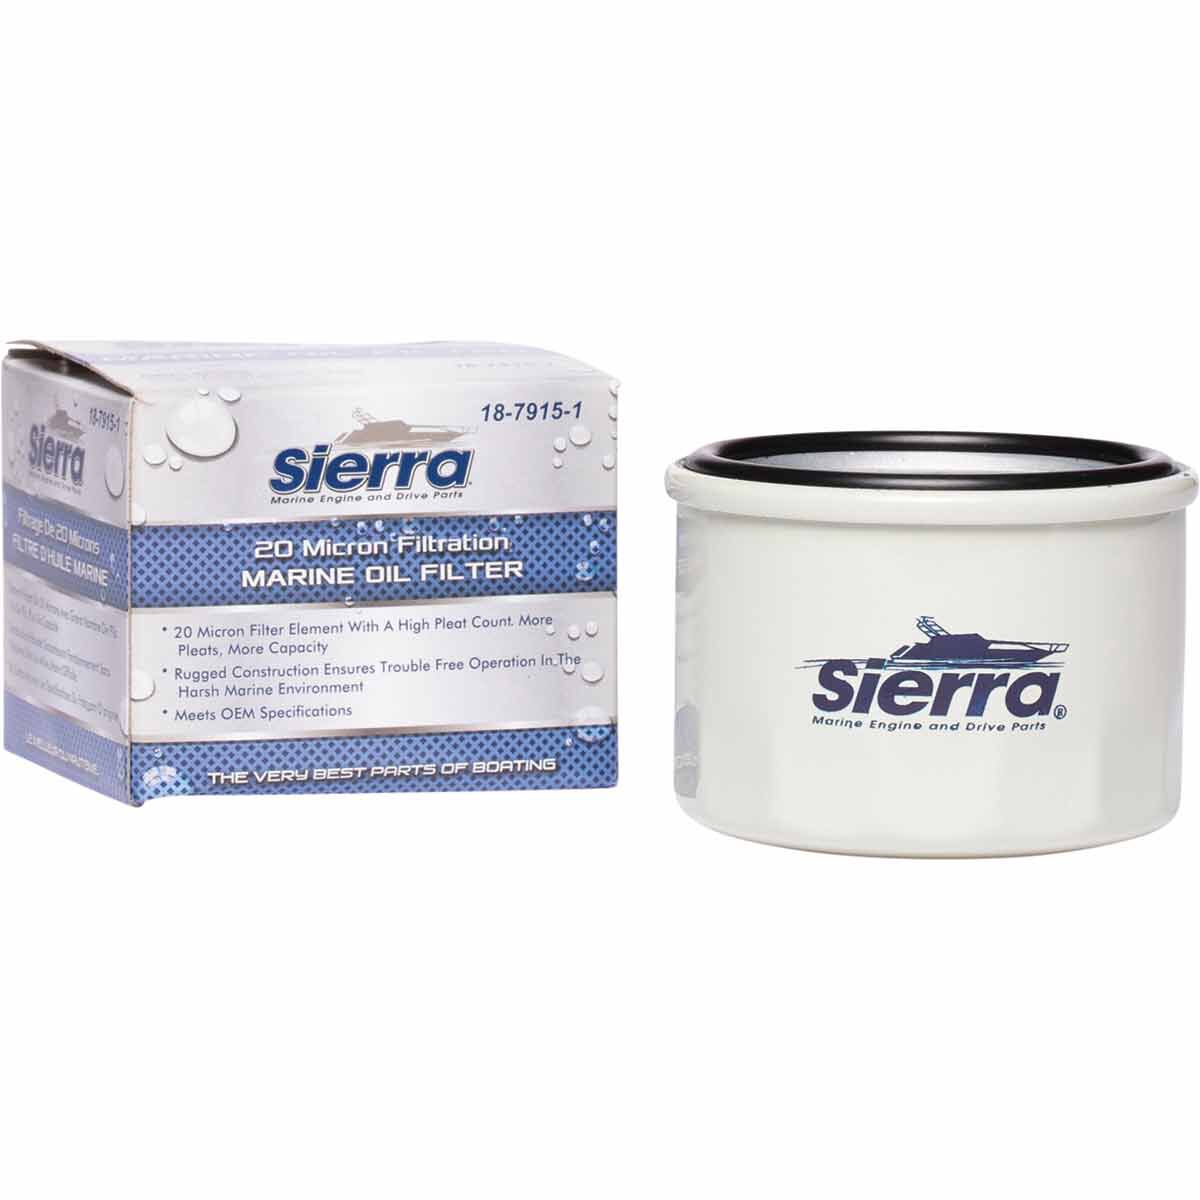 Sierra Outboard Oil Filter - S-18-7915-1, , scaau_hi-res